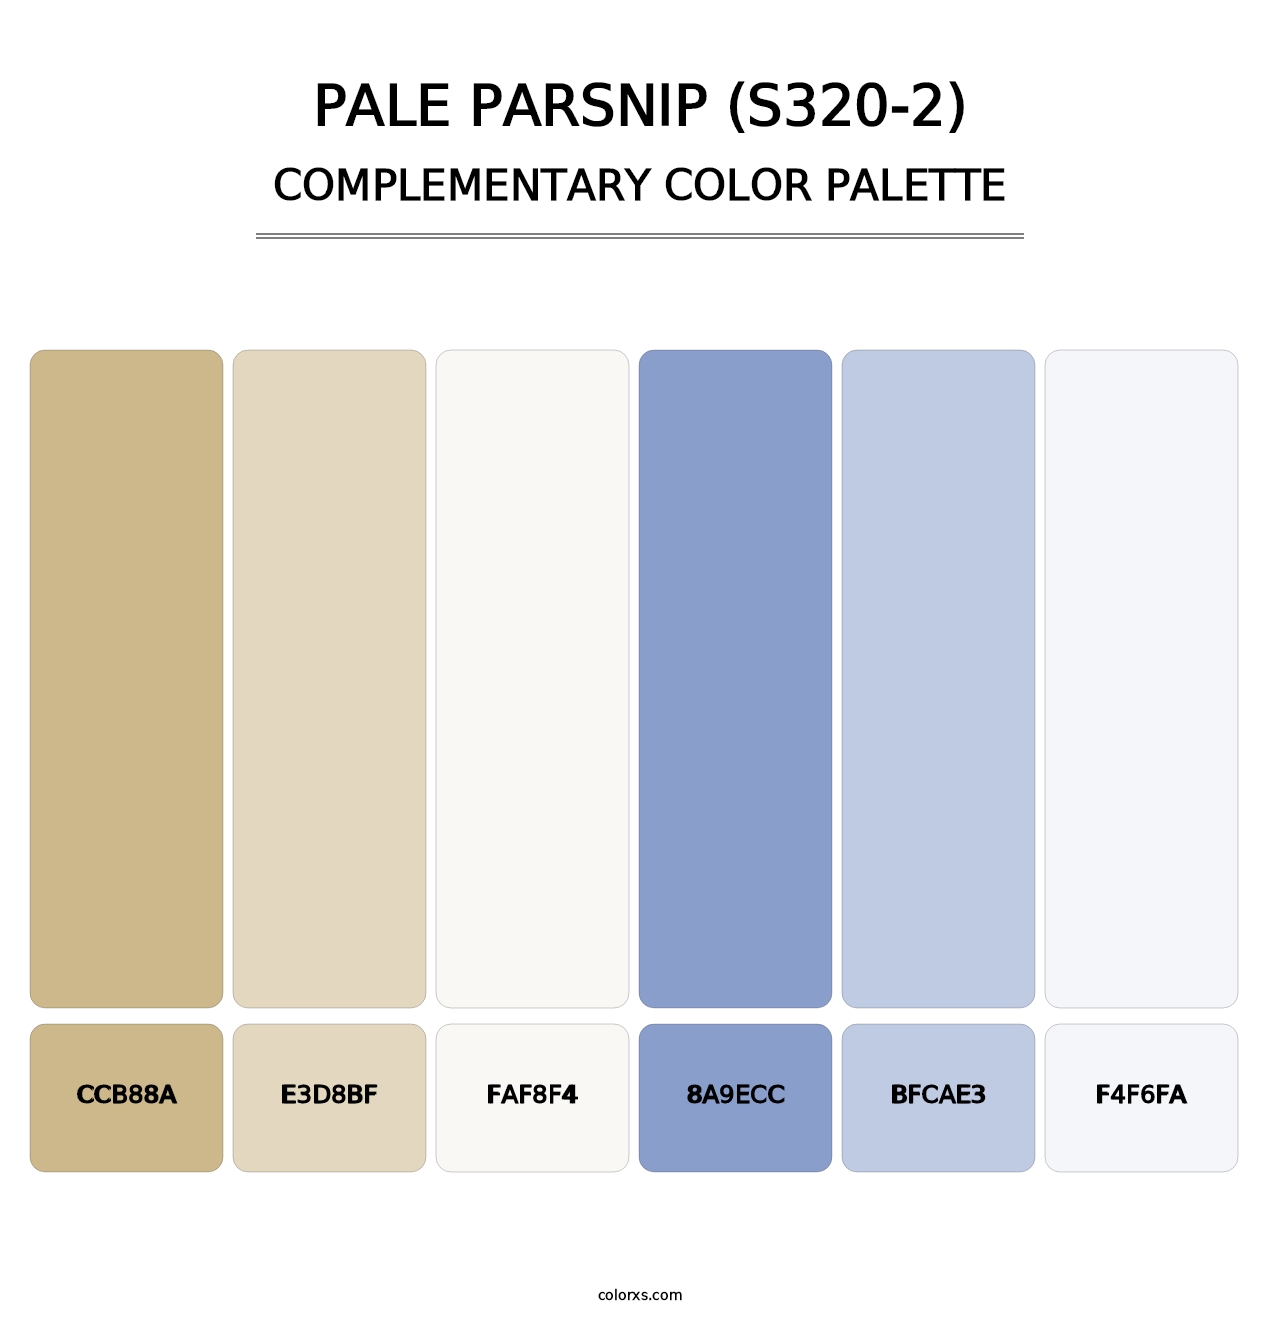 Pale Parsnip (S320-2) - Complementary Color Palette